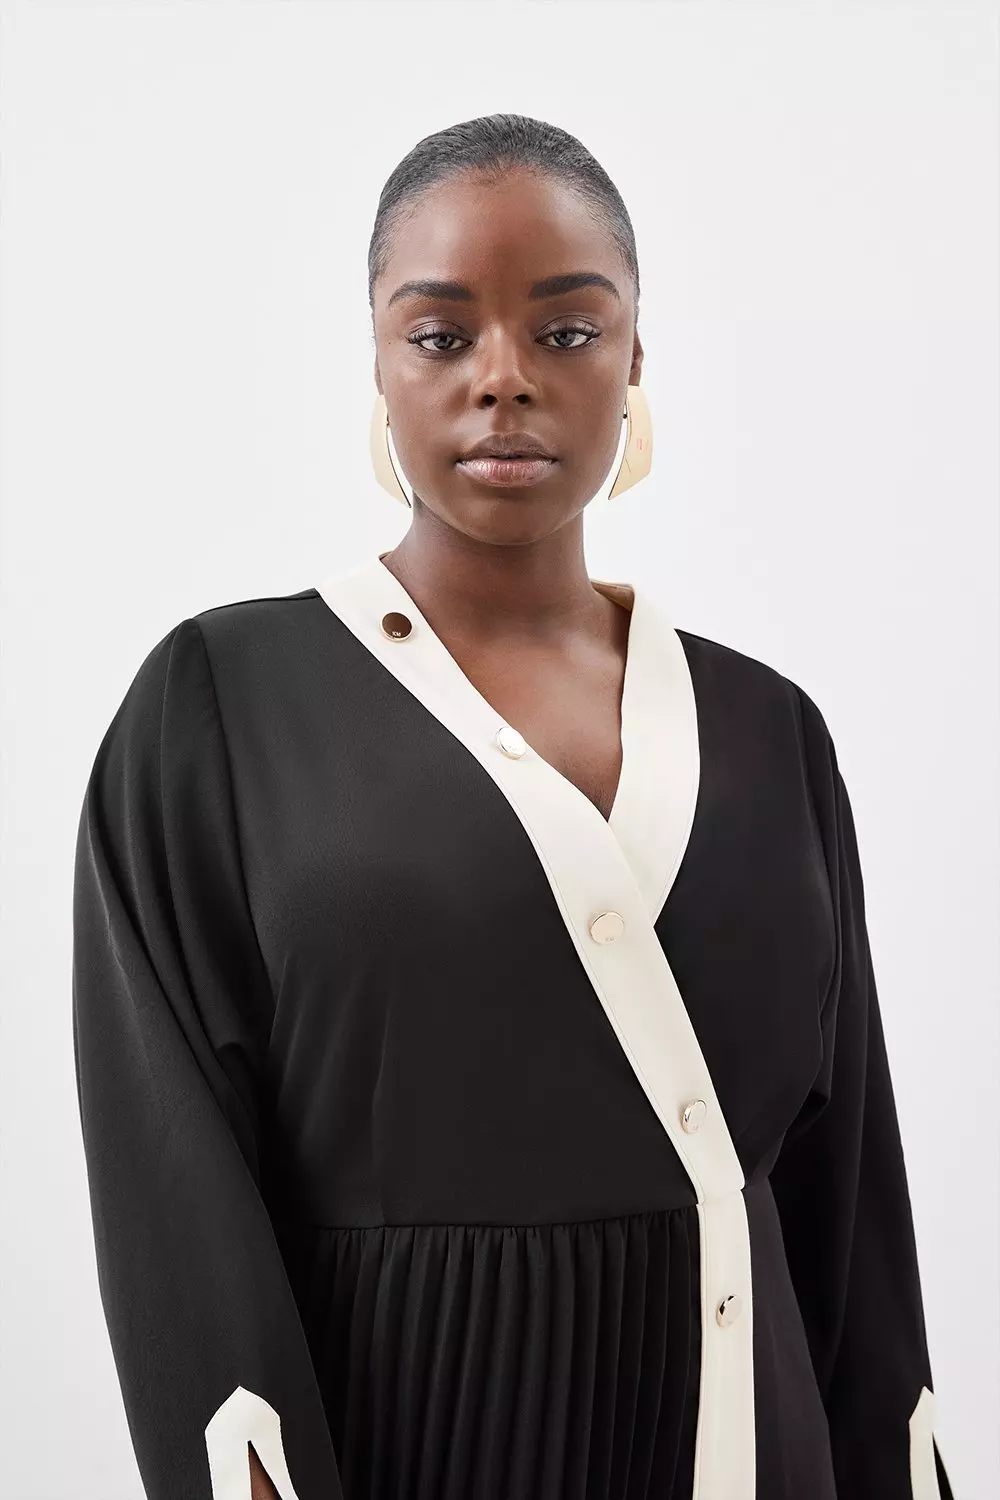 Women's Plus Size Black Pleated Sleeve Blouse (1XL)